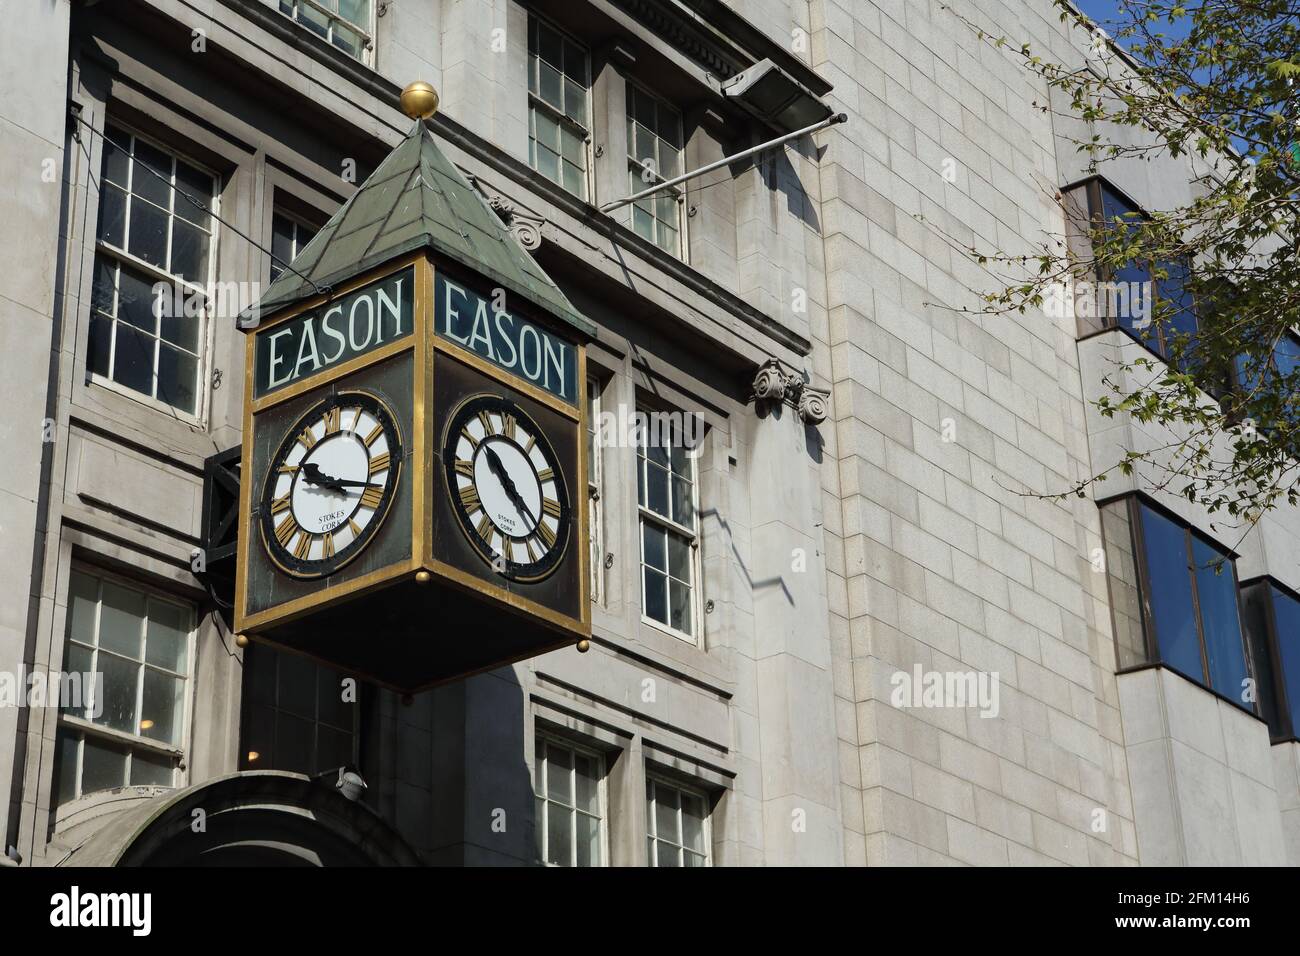 Eason-Uhr in der O'connell Street in Dublin, Irland Stockfoto